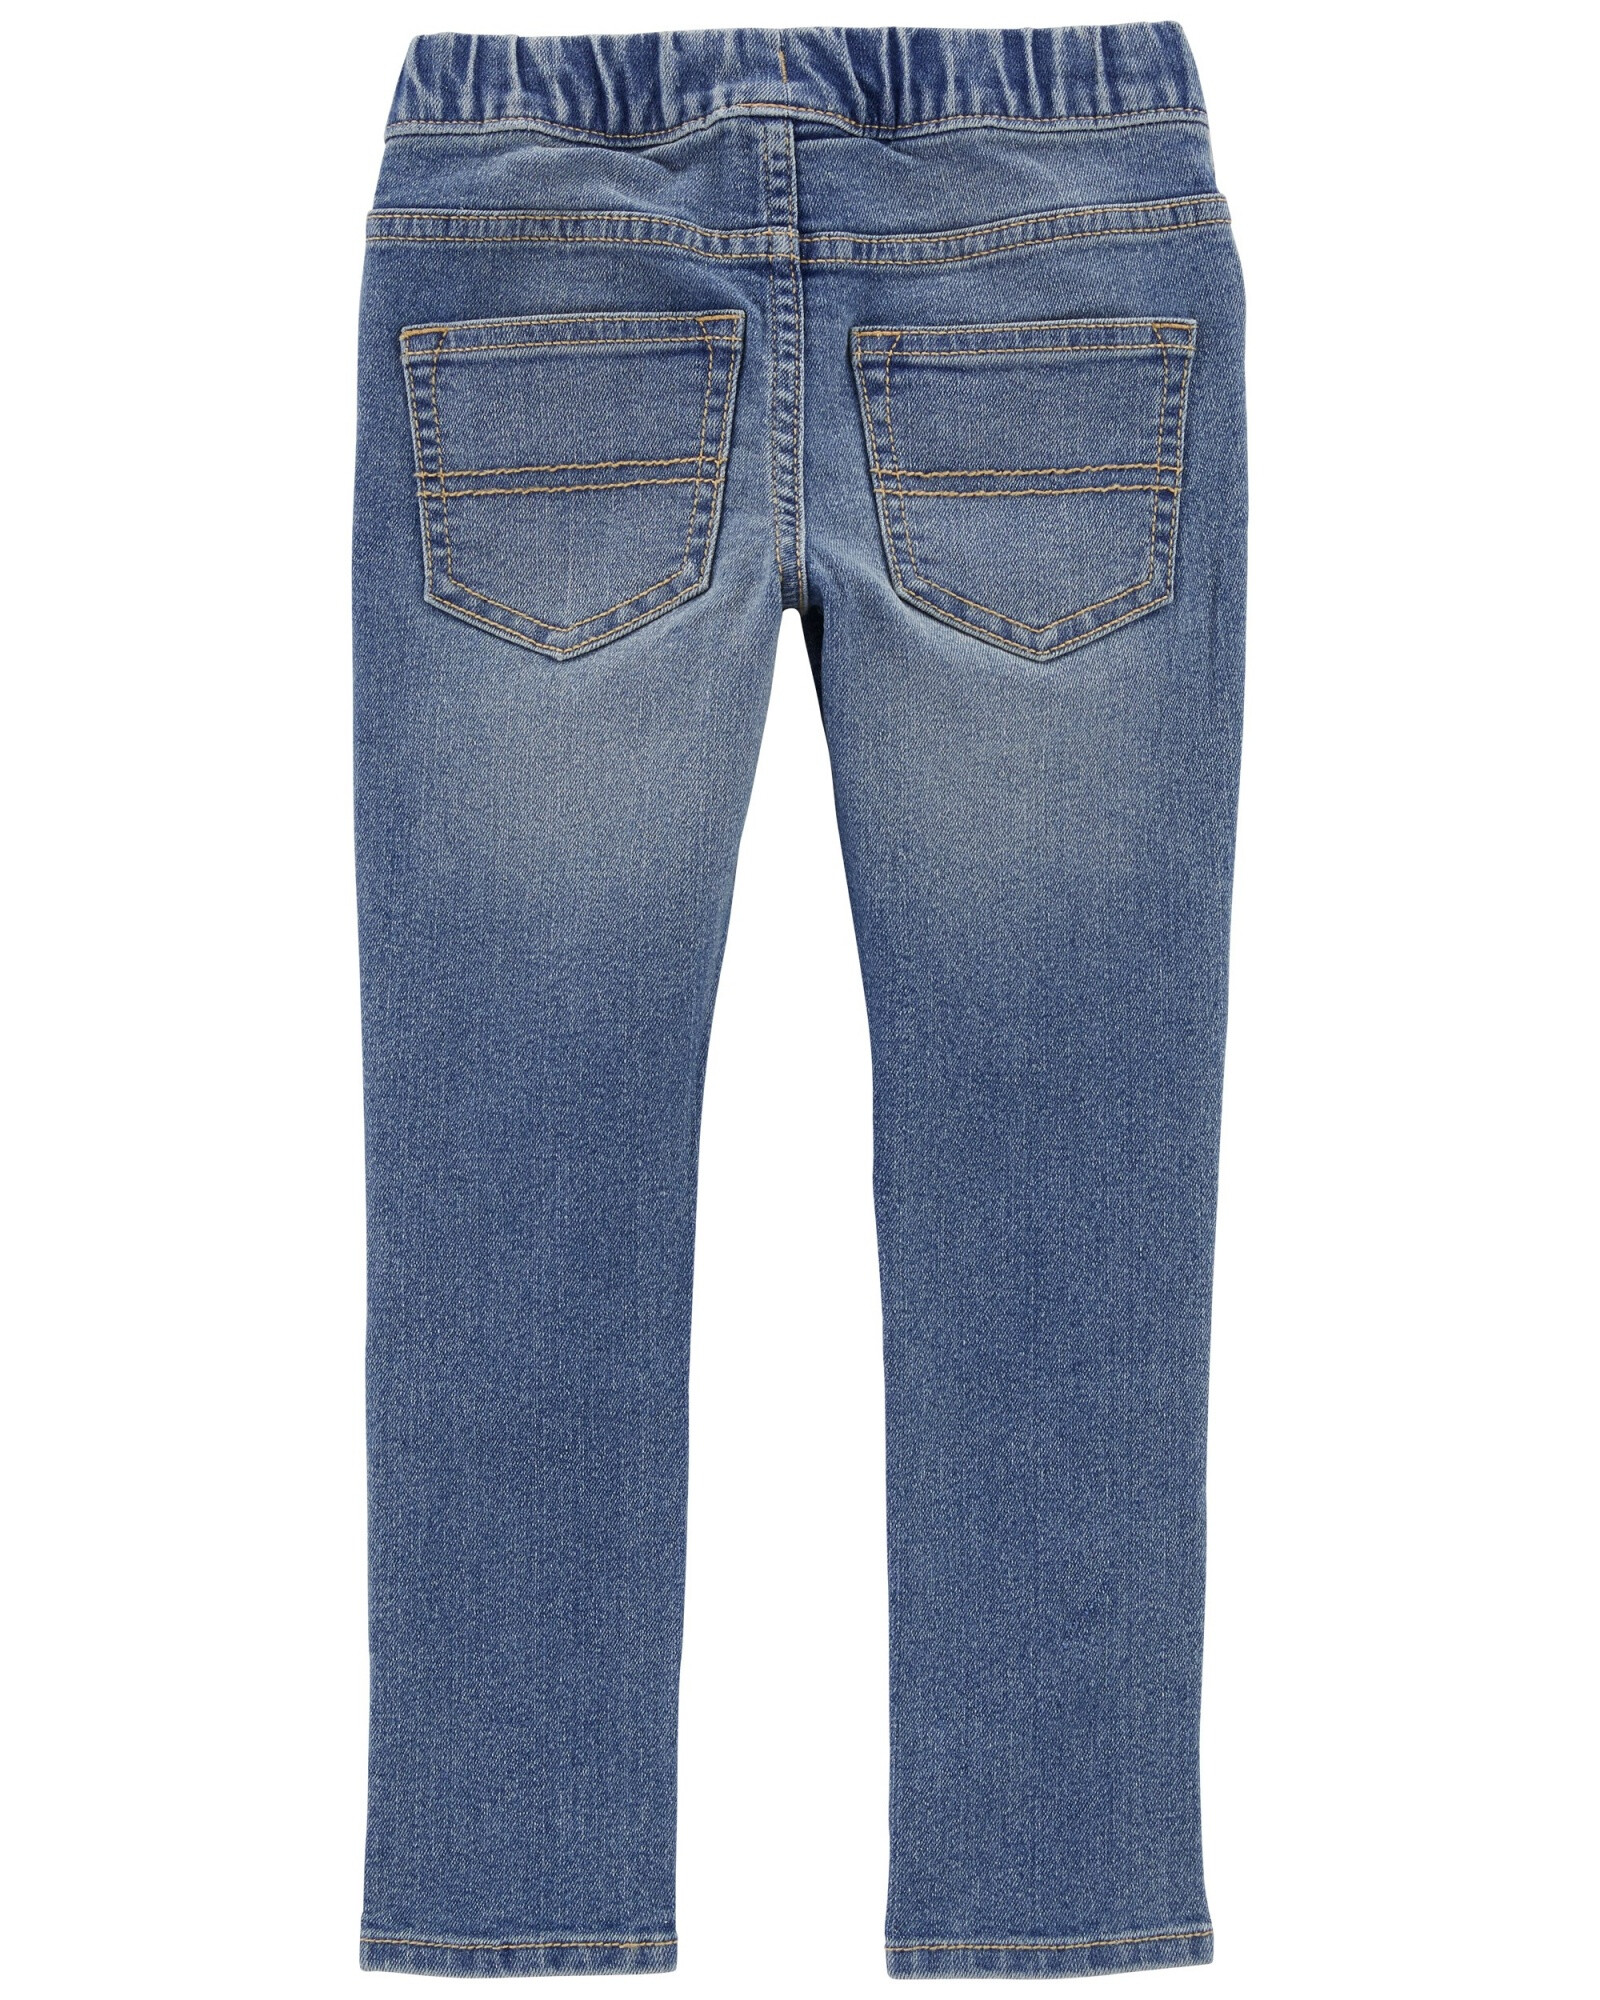 Pantalón jean ajustado, con rasgados. Talles 2-5T Sin color